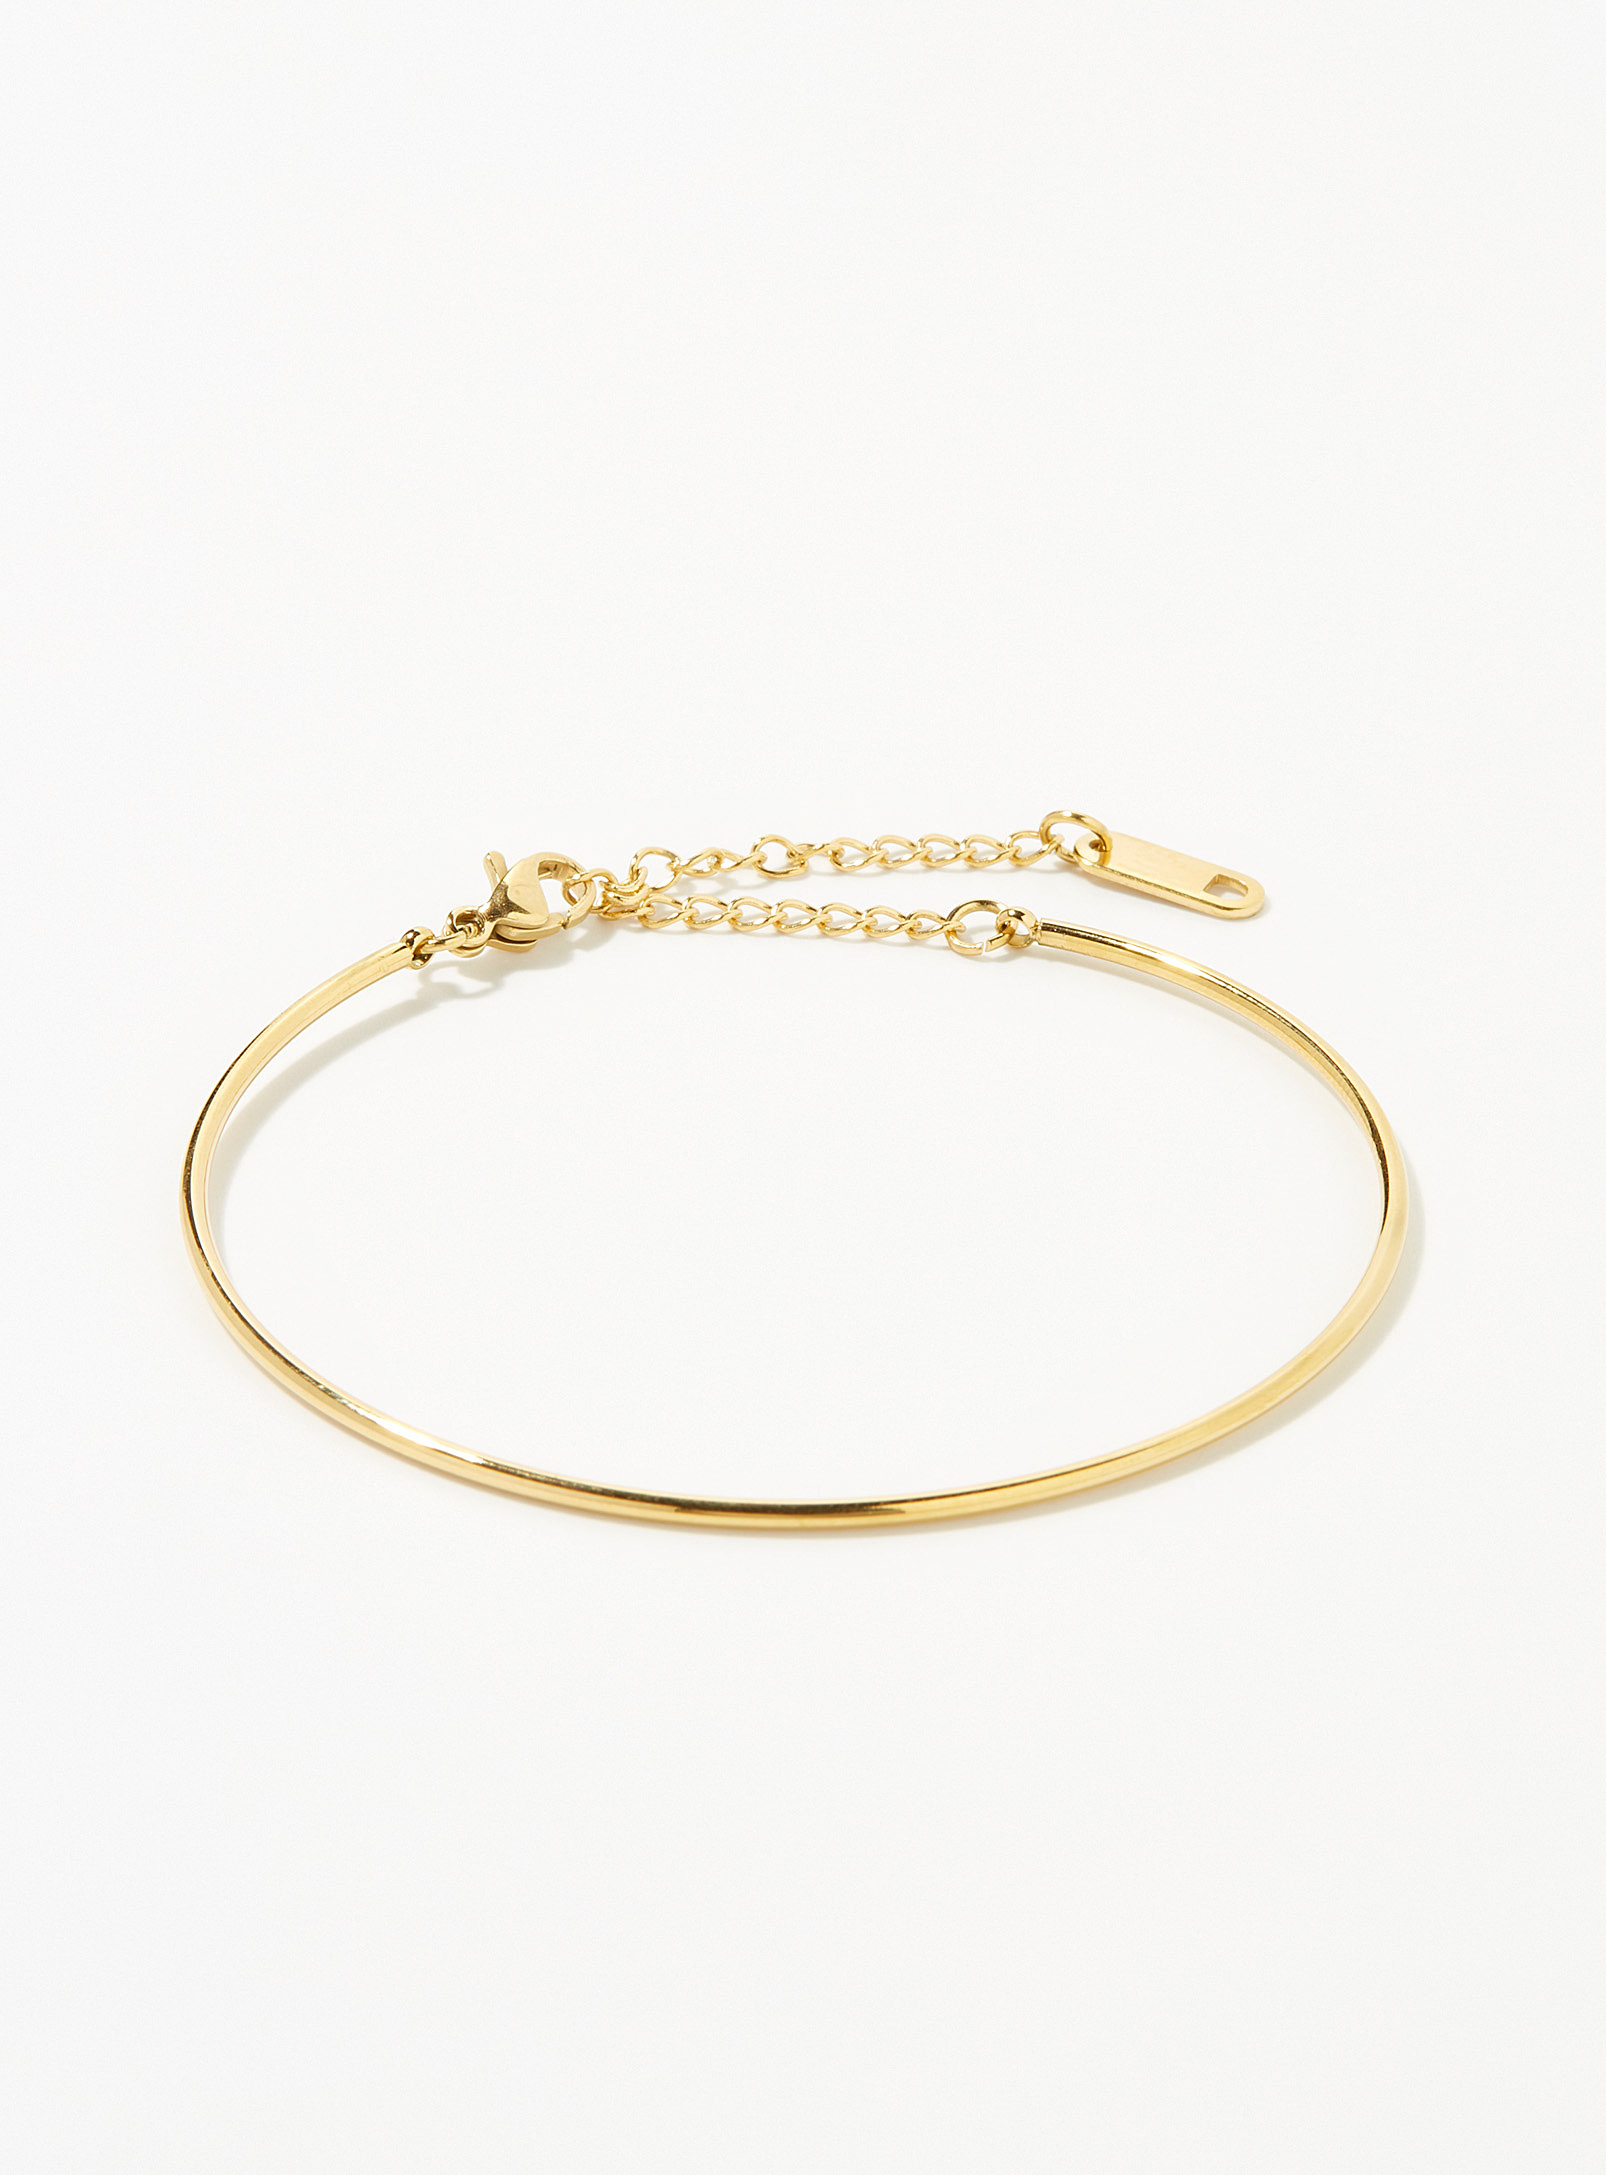 Simons - Women's Minimalist cuff bracelet